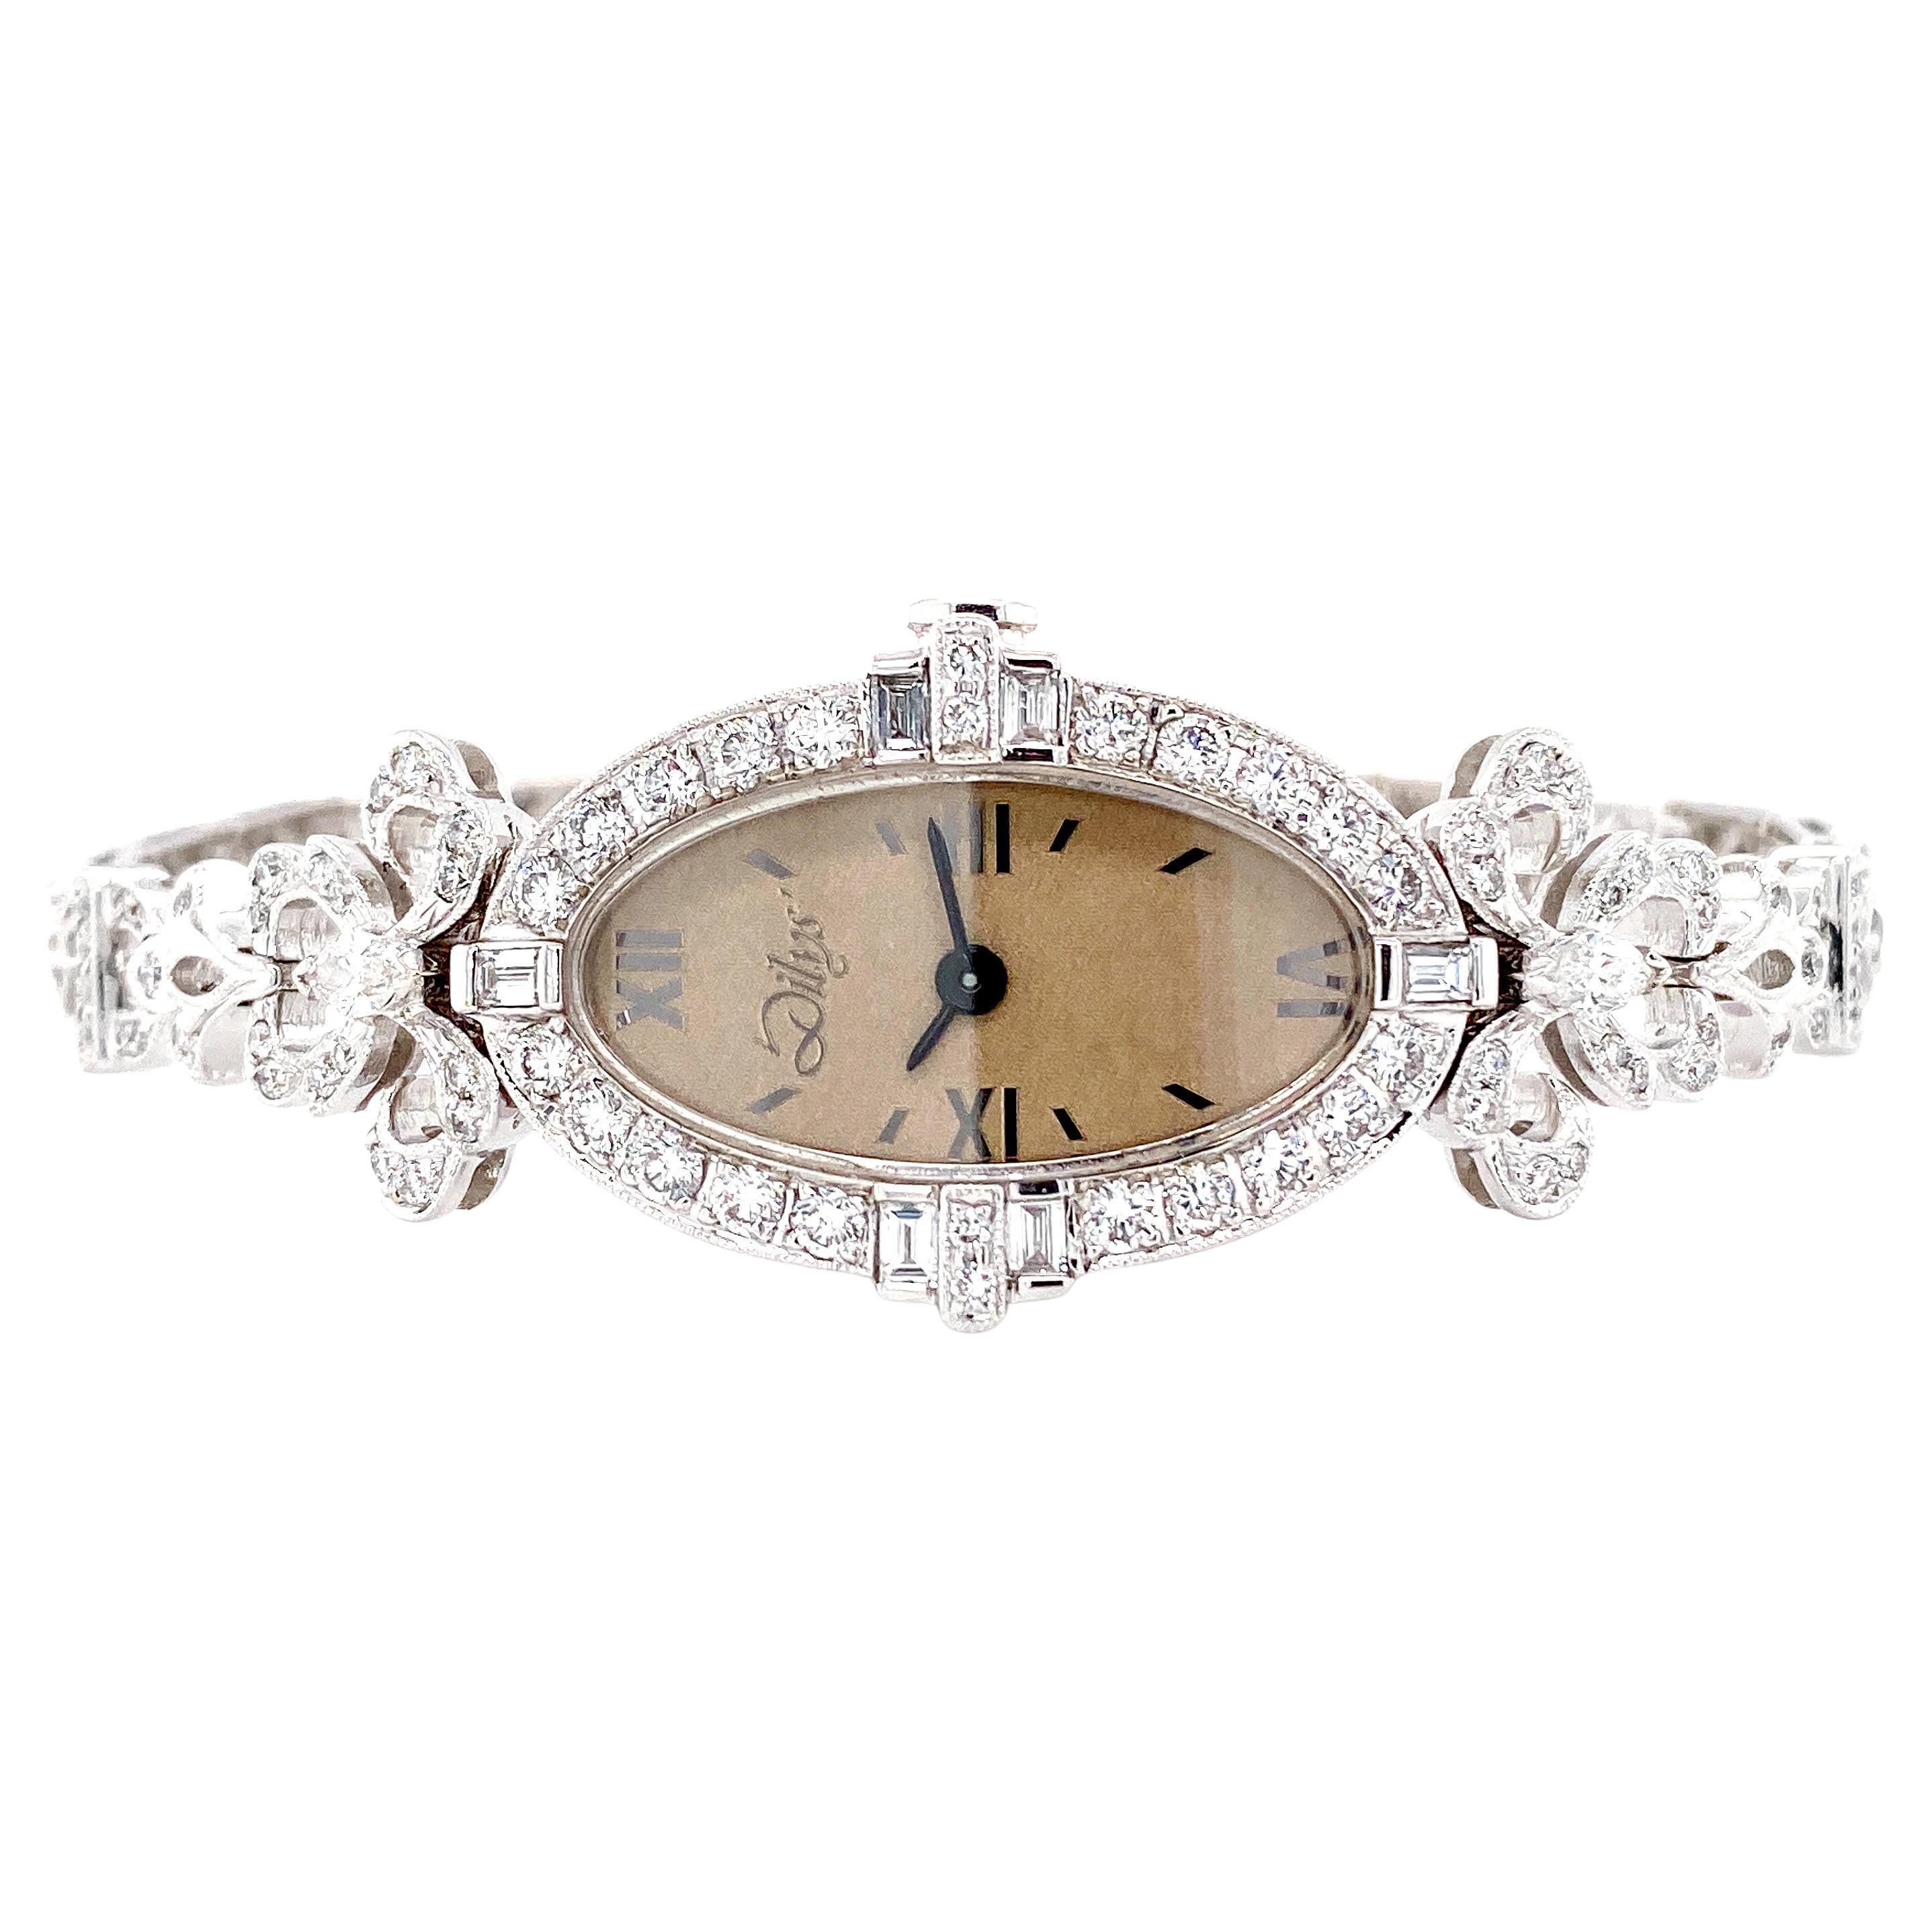 Art Deco Inspired Diamond Swiss Quartz Movement Watch in 18 Karat Gold